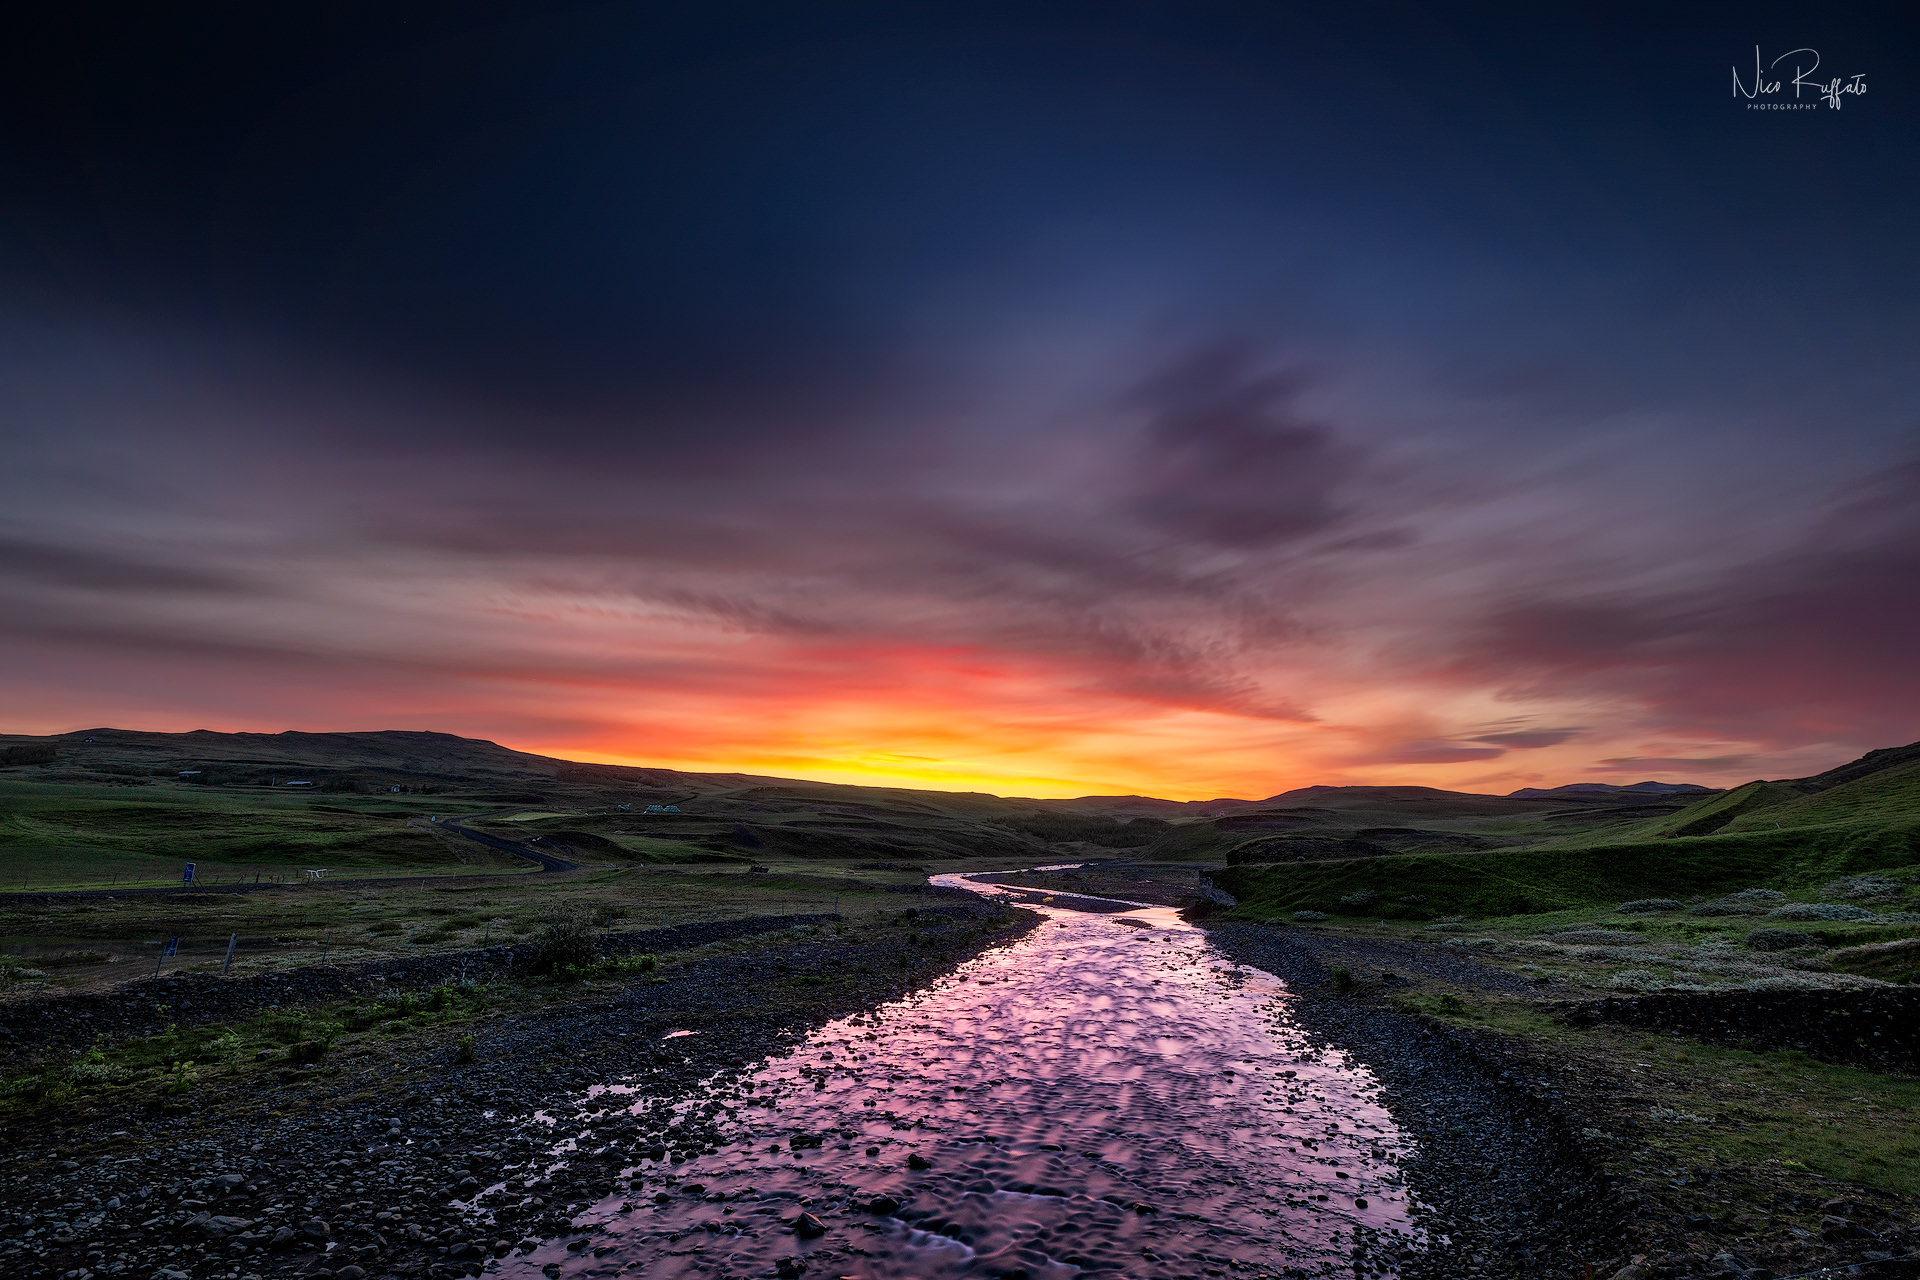 Categorie: Landscape & Nature, Reportage; Photographer:NICO RUFFATO; Location: Iceland